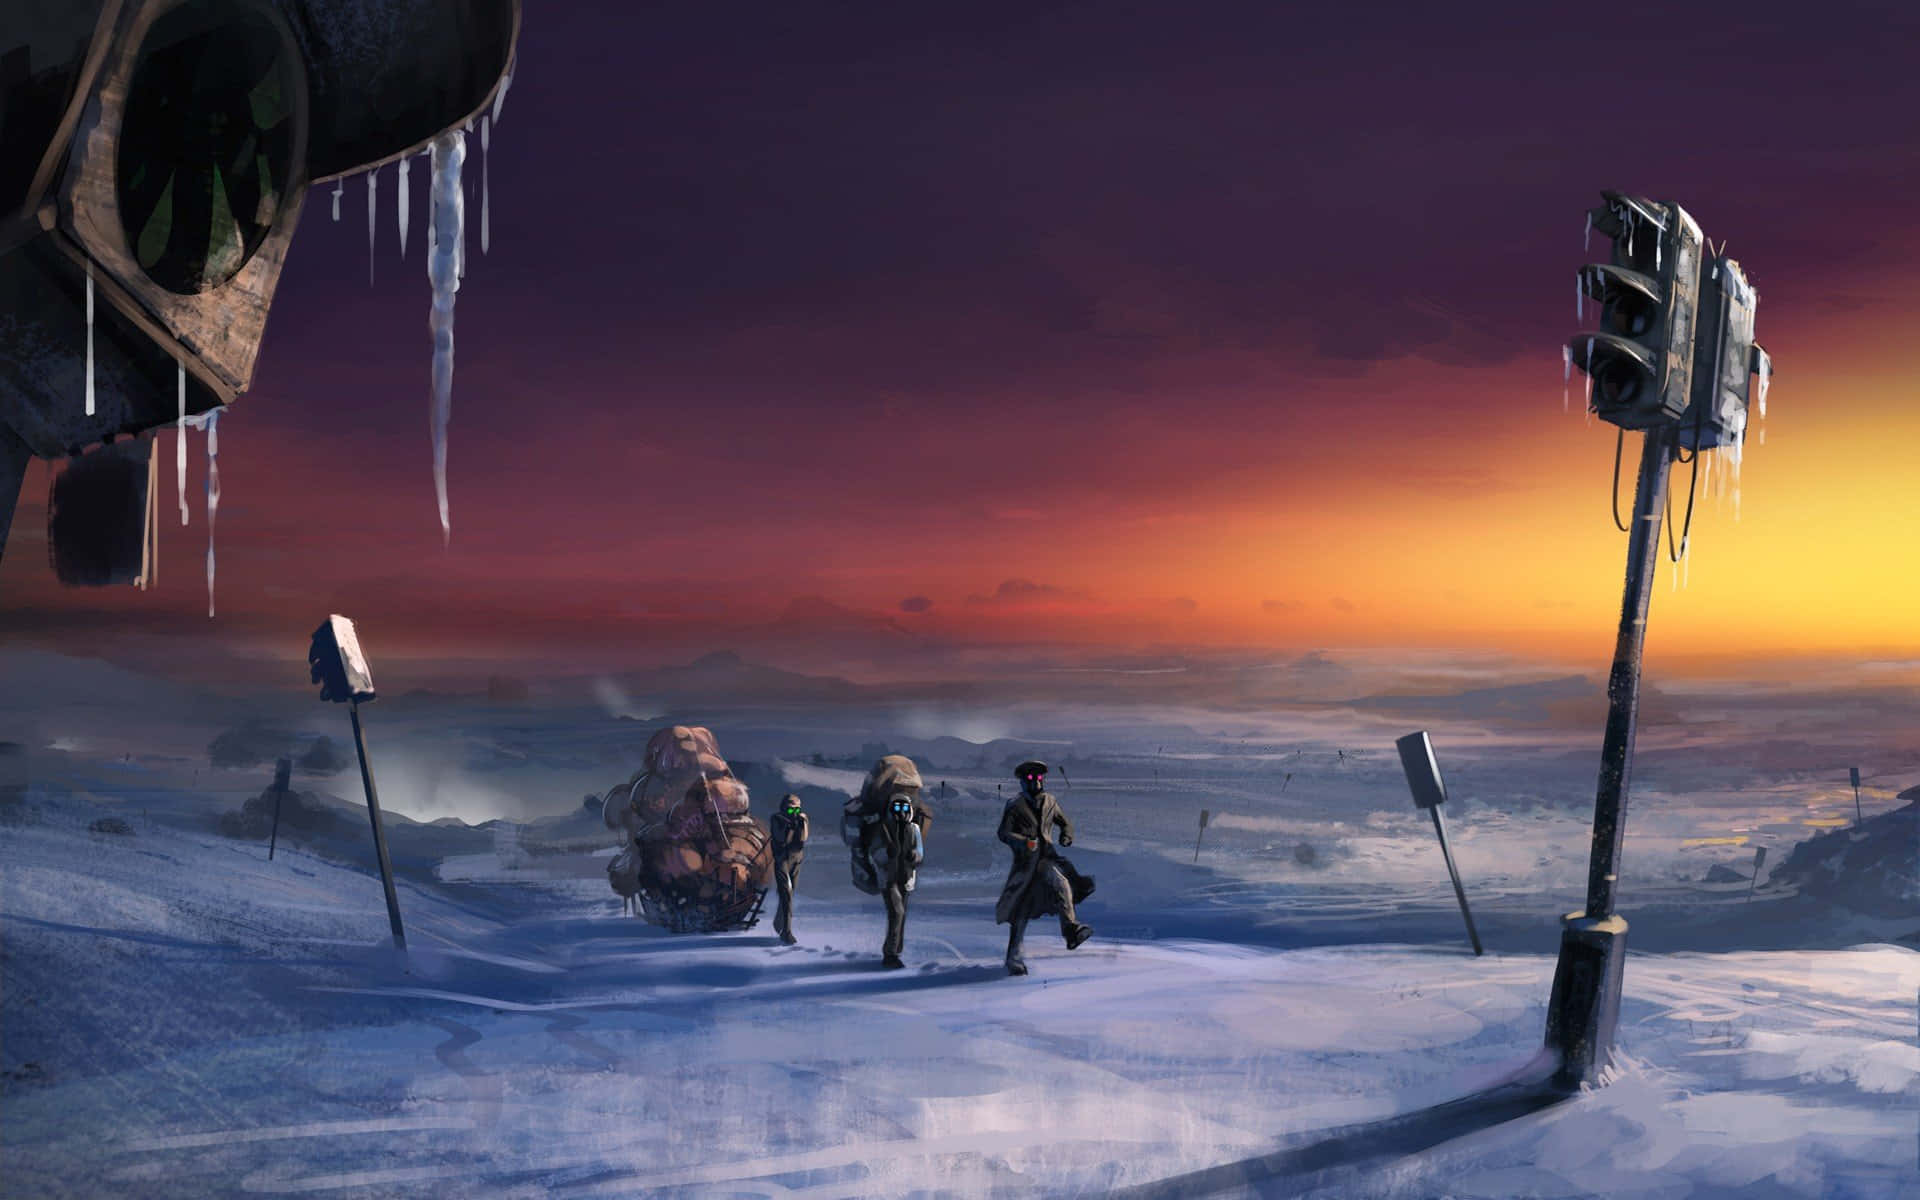 Apocalyptic Landscape under Frozen Skies Wallpaper